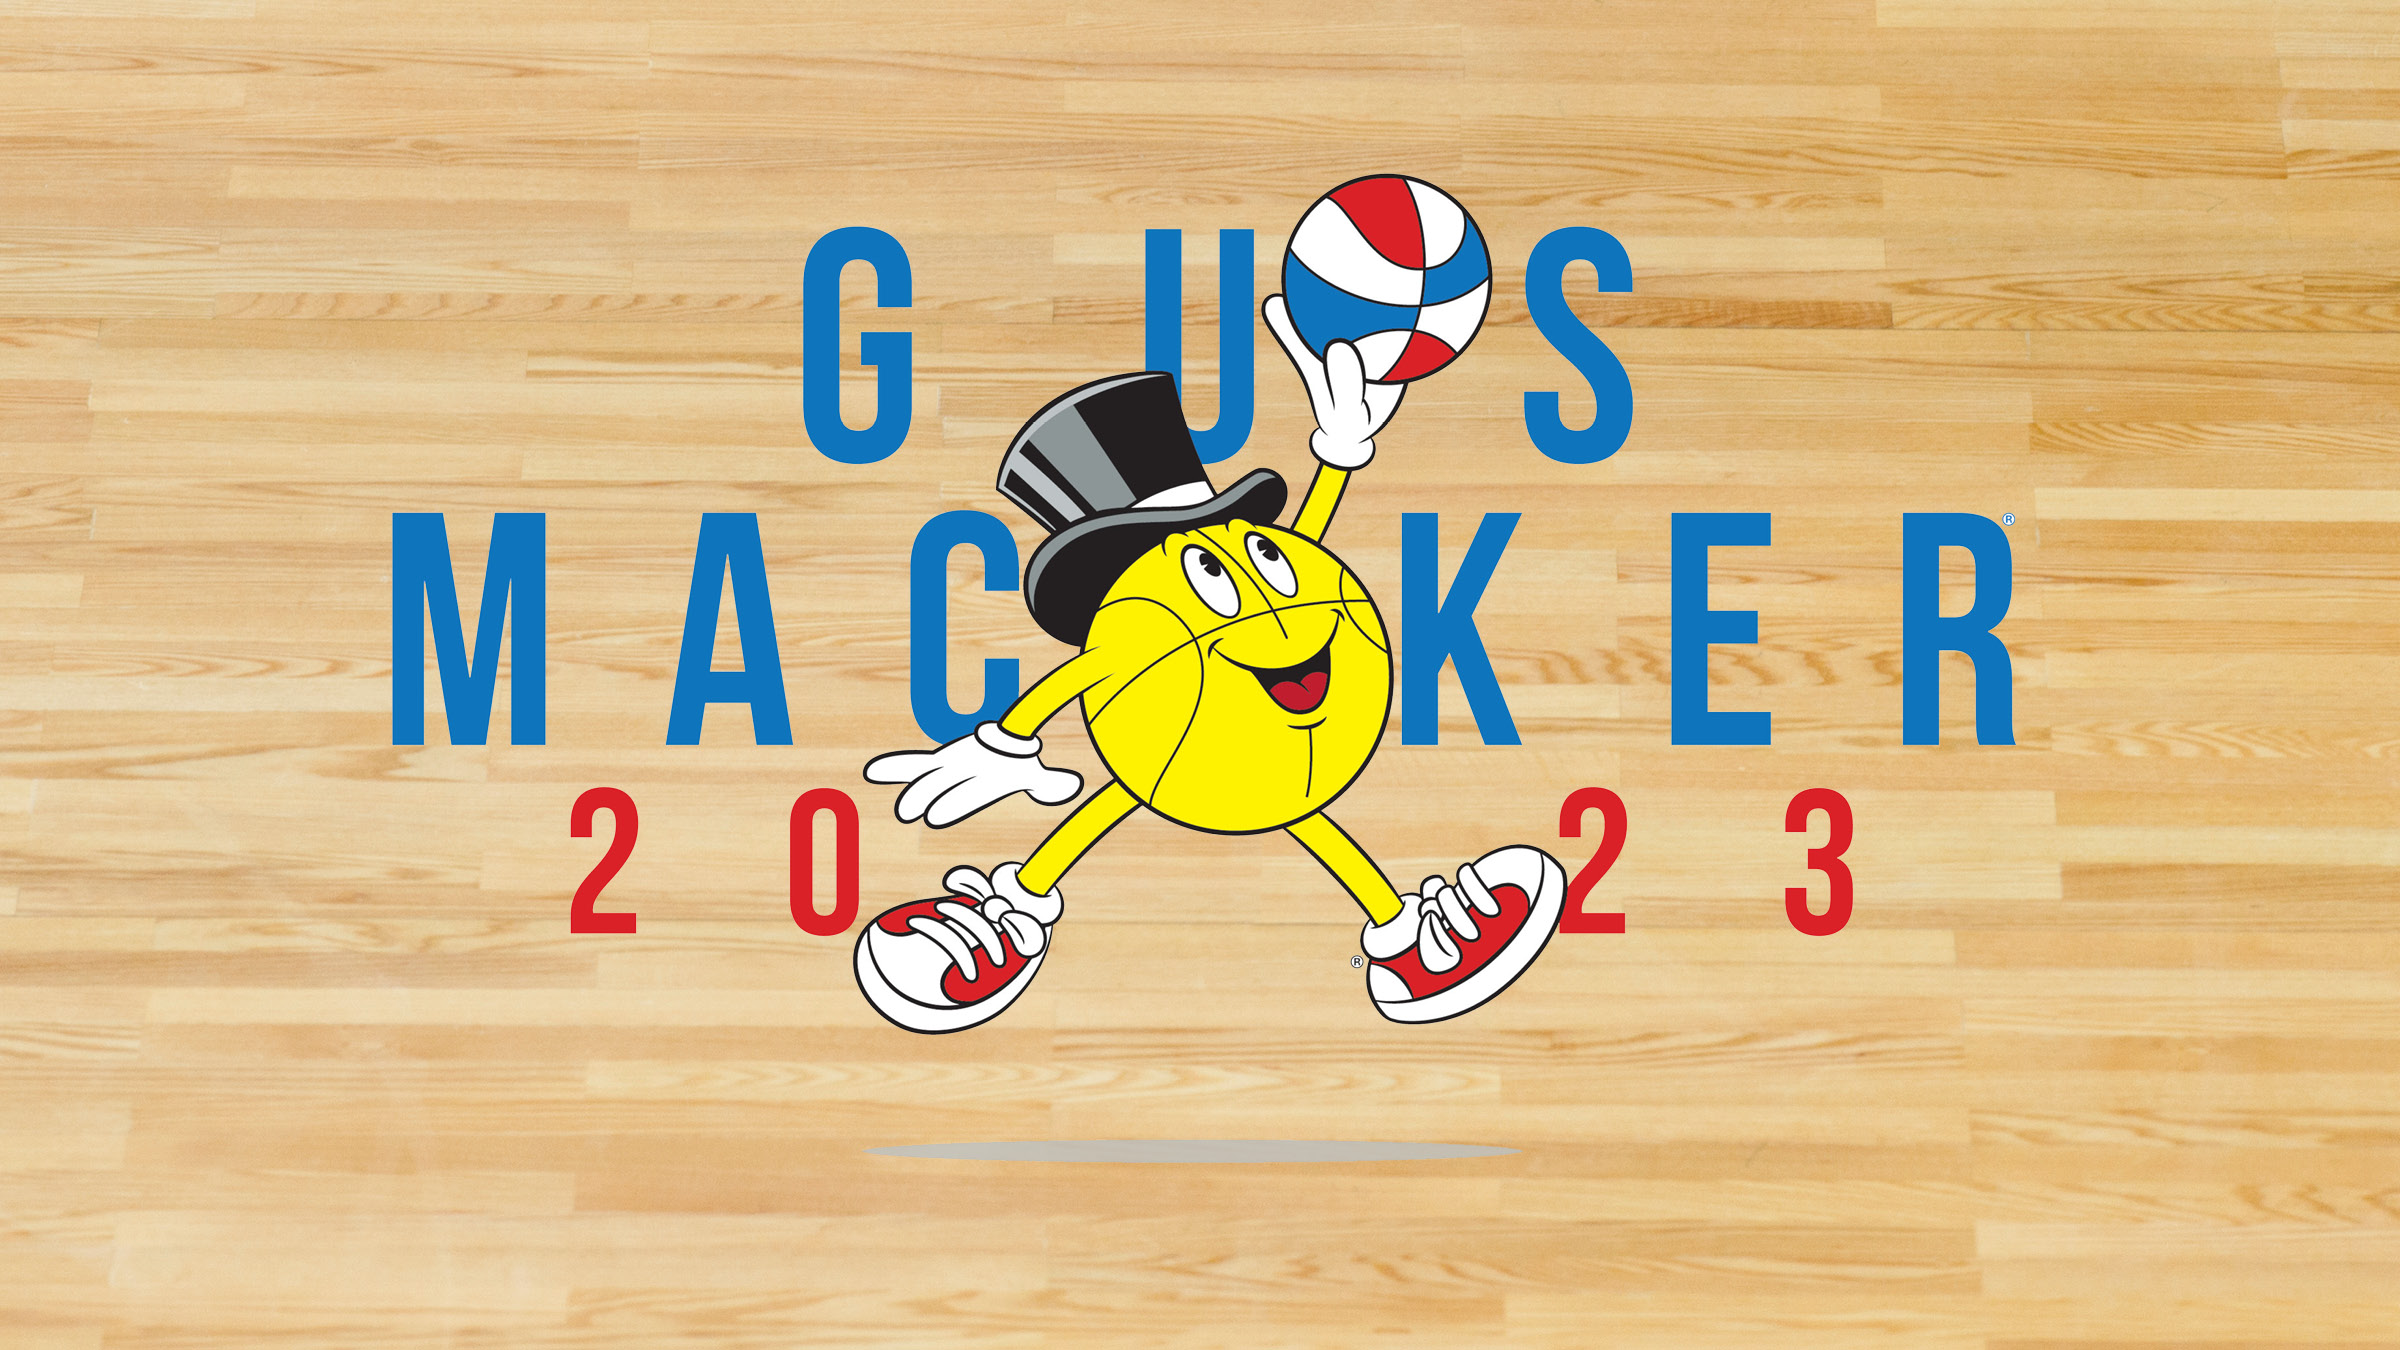 Gus Macker Tournament